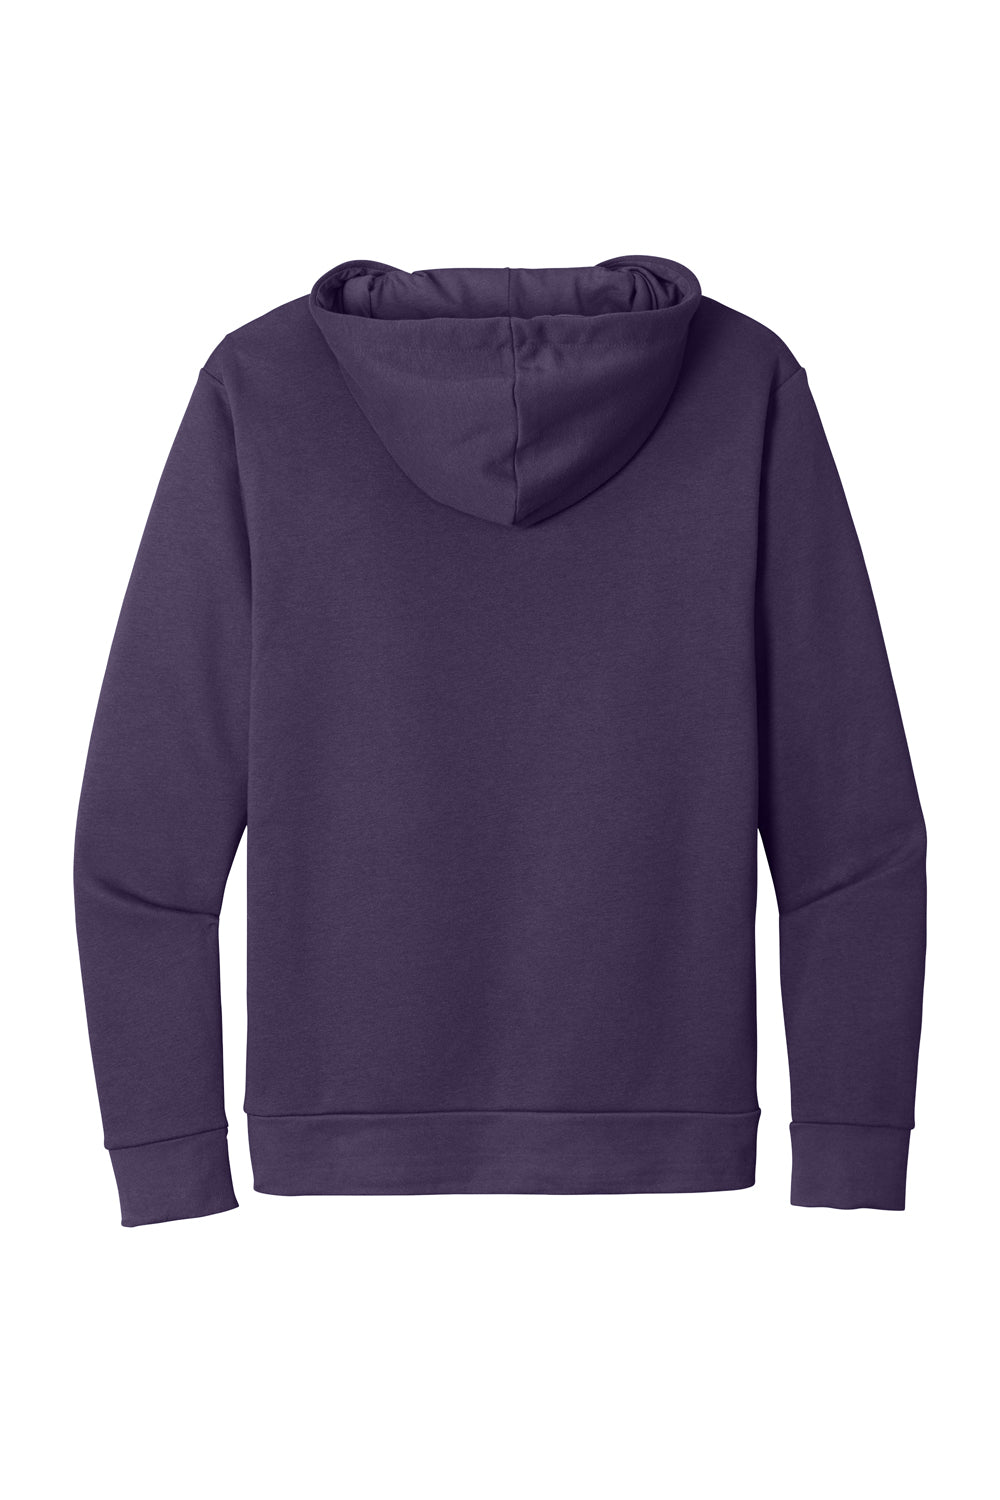 Next Level Mens Fleece Hooded Sweatshirt Hoodie Galaxy Purple Flat Back